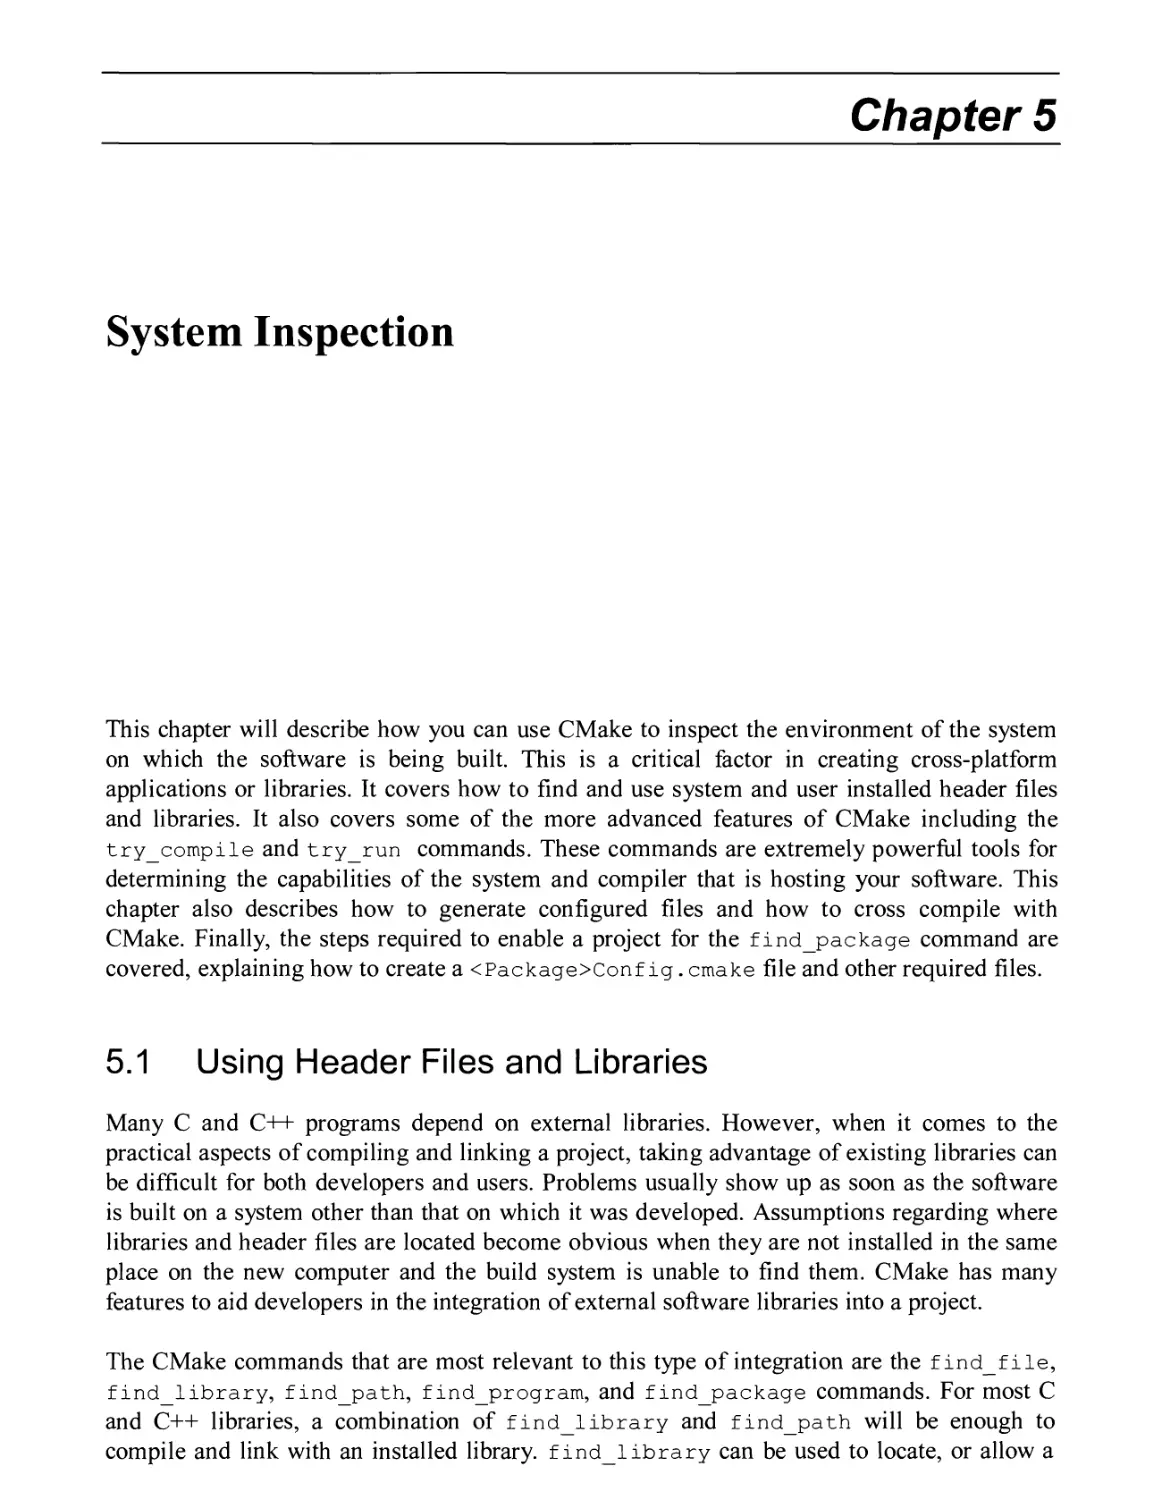 5. SYSTEM INSPECTION